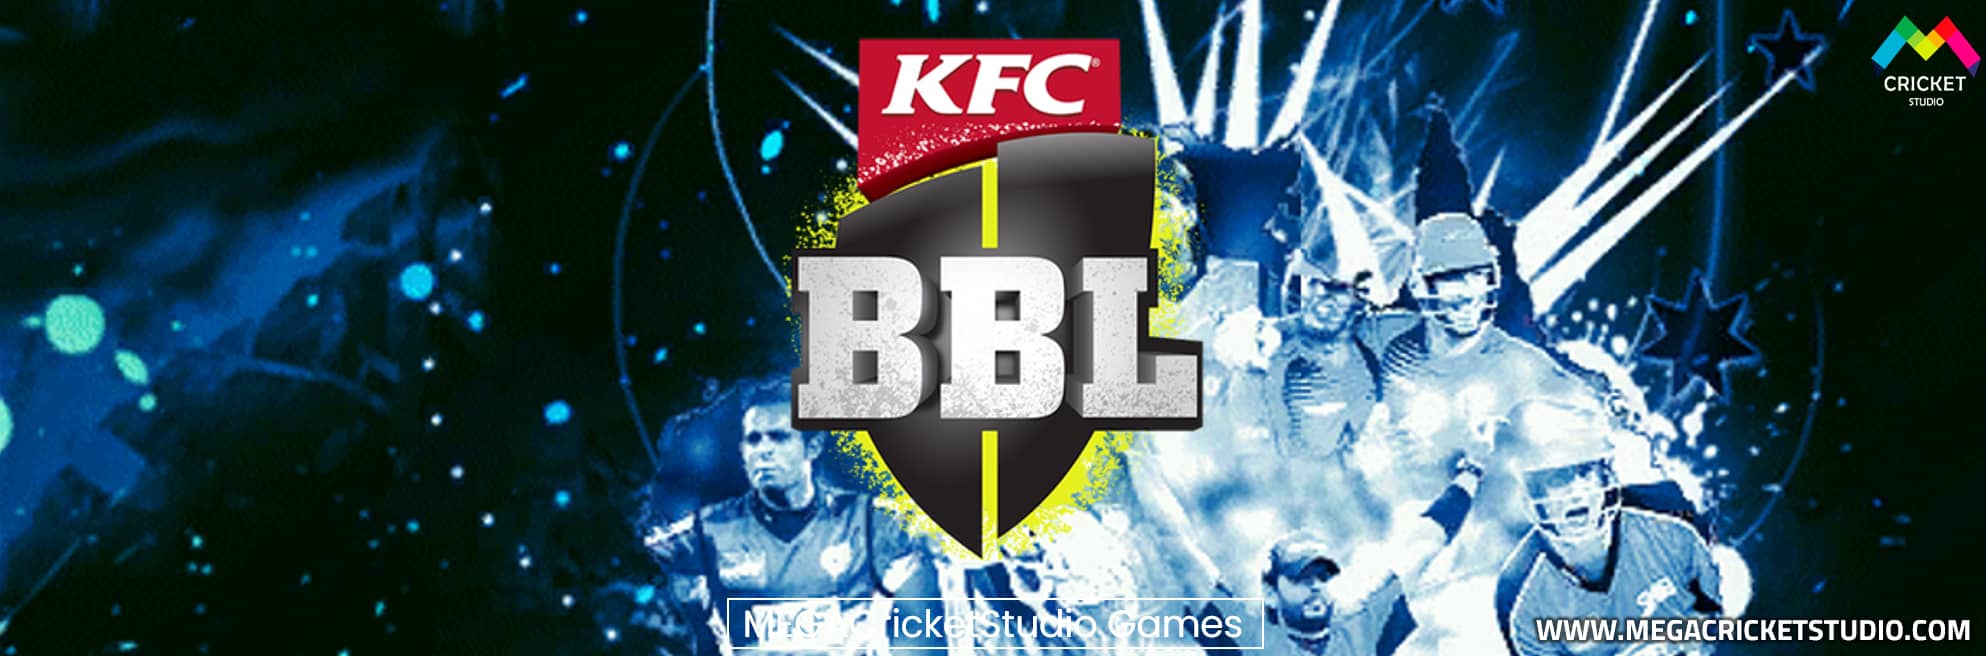 KFC BIG BASH LEAGUE T20 SEASON I Patch for EA Cricket 07